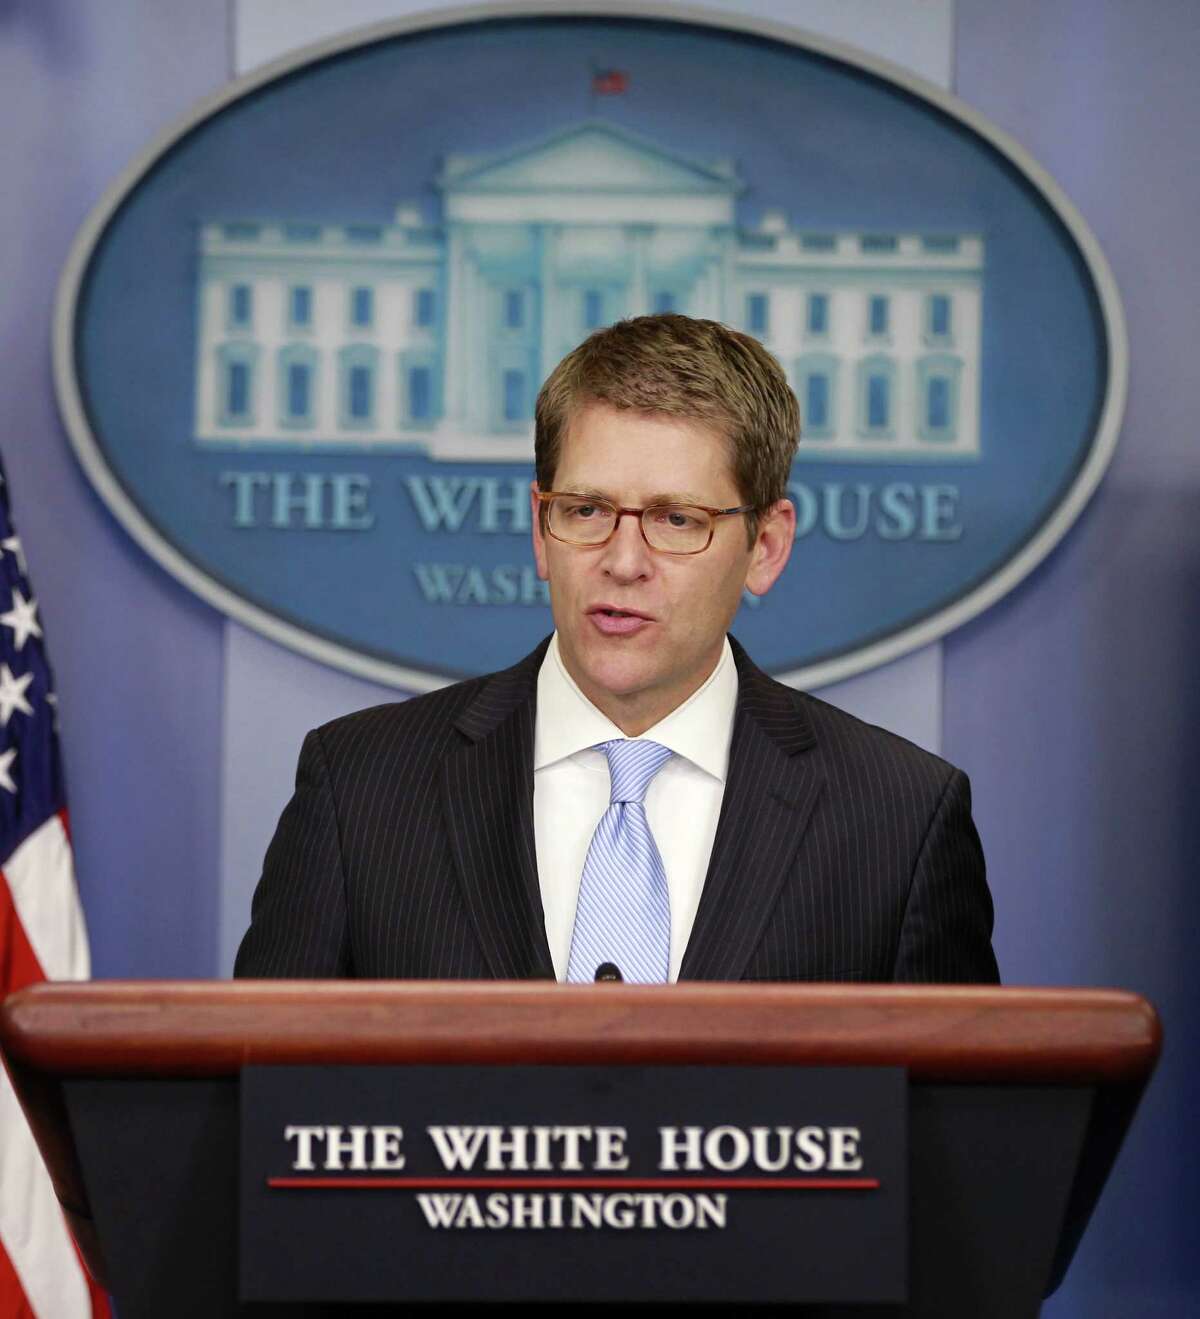 White House Press Secretary Jay Carney backs up the president’s denials.